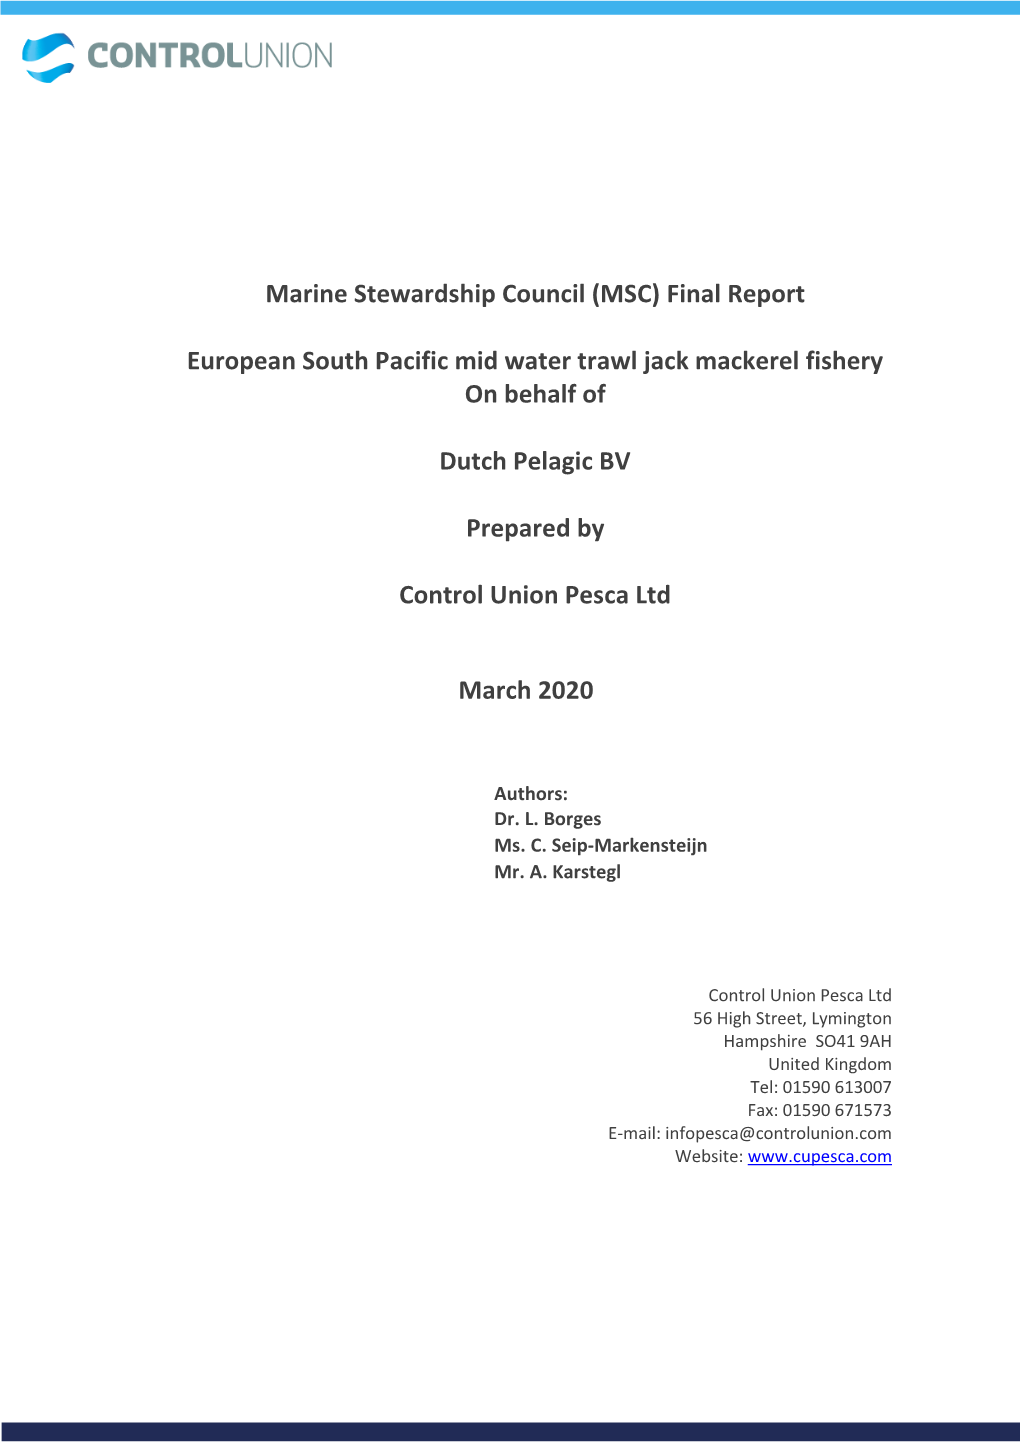 Marine Stewardship Council (MSC) Final Report European South Pacific Mid Water Trawl Jack Mackerel Fishery on Behalf of Dutch